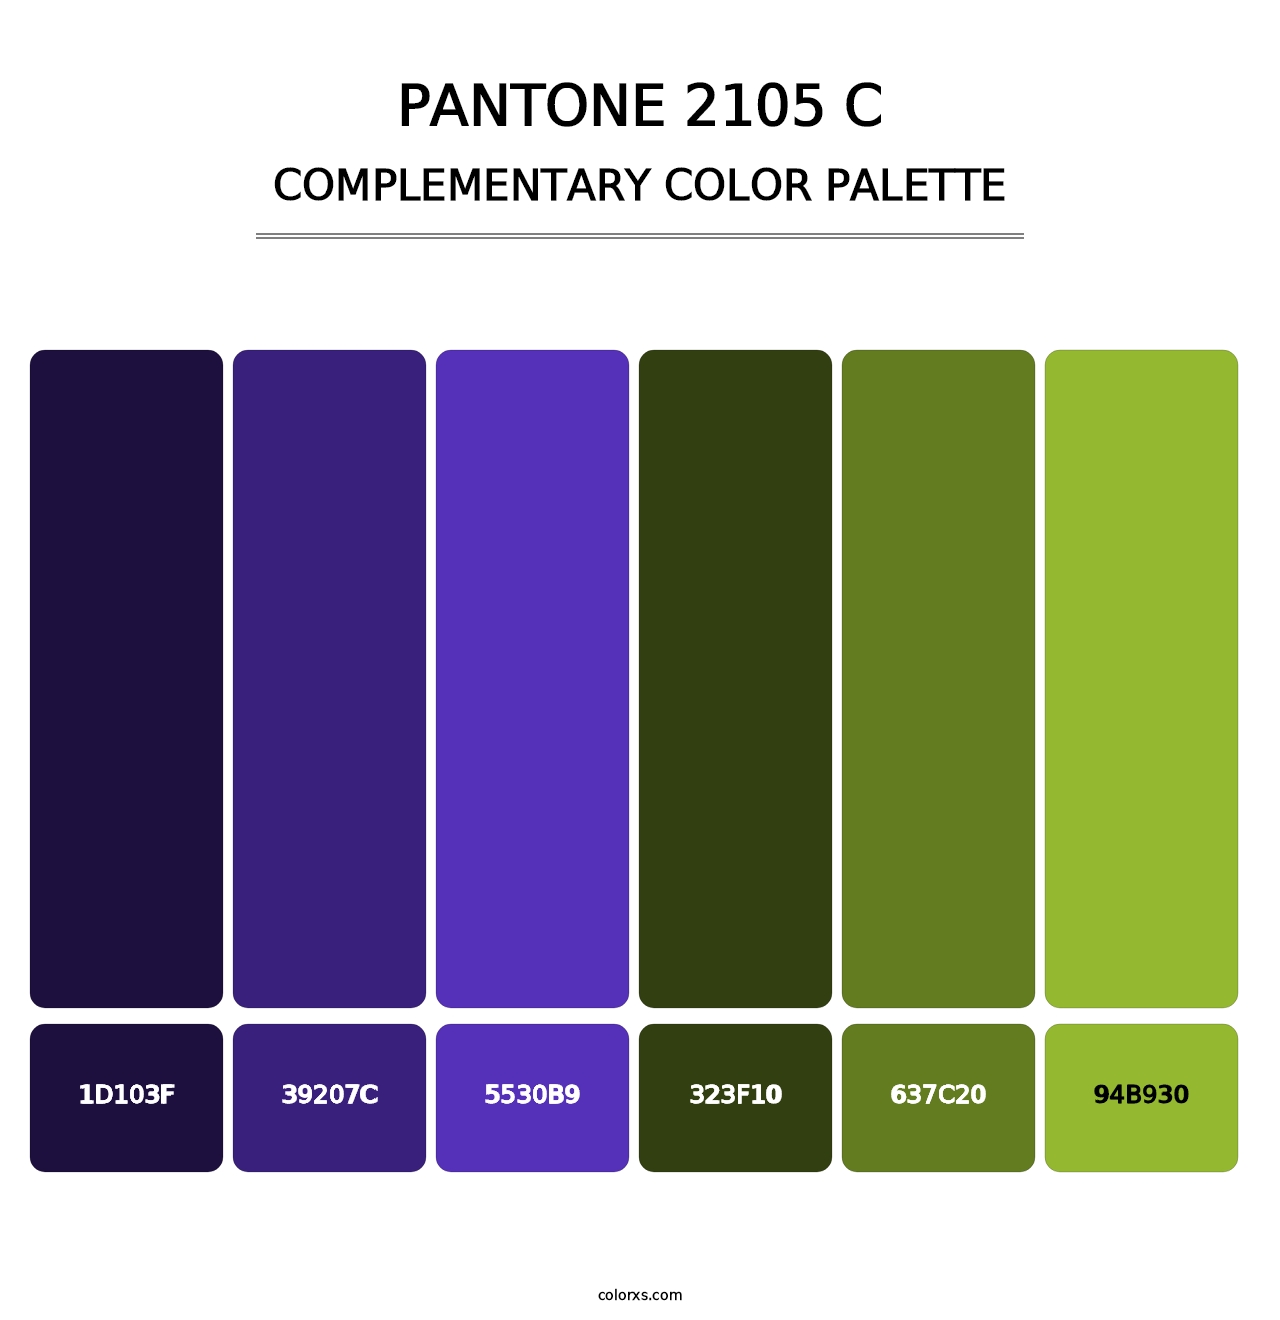 PANTONE 2105 C - Complementary Color Palette